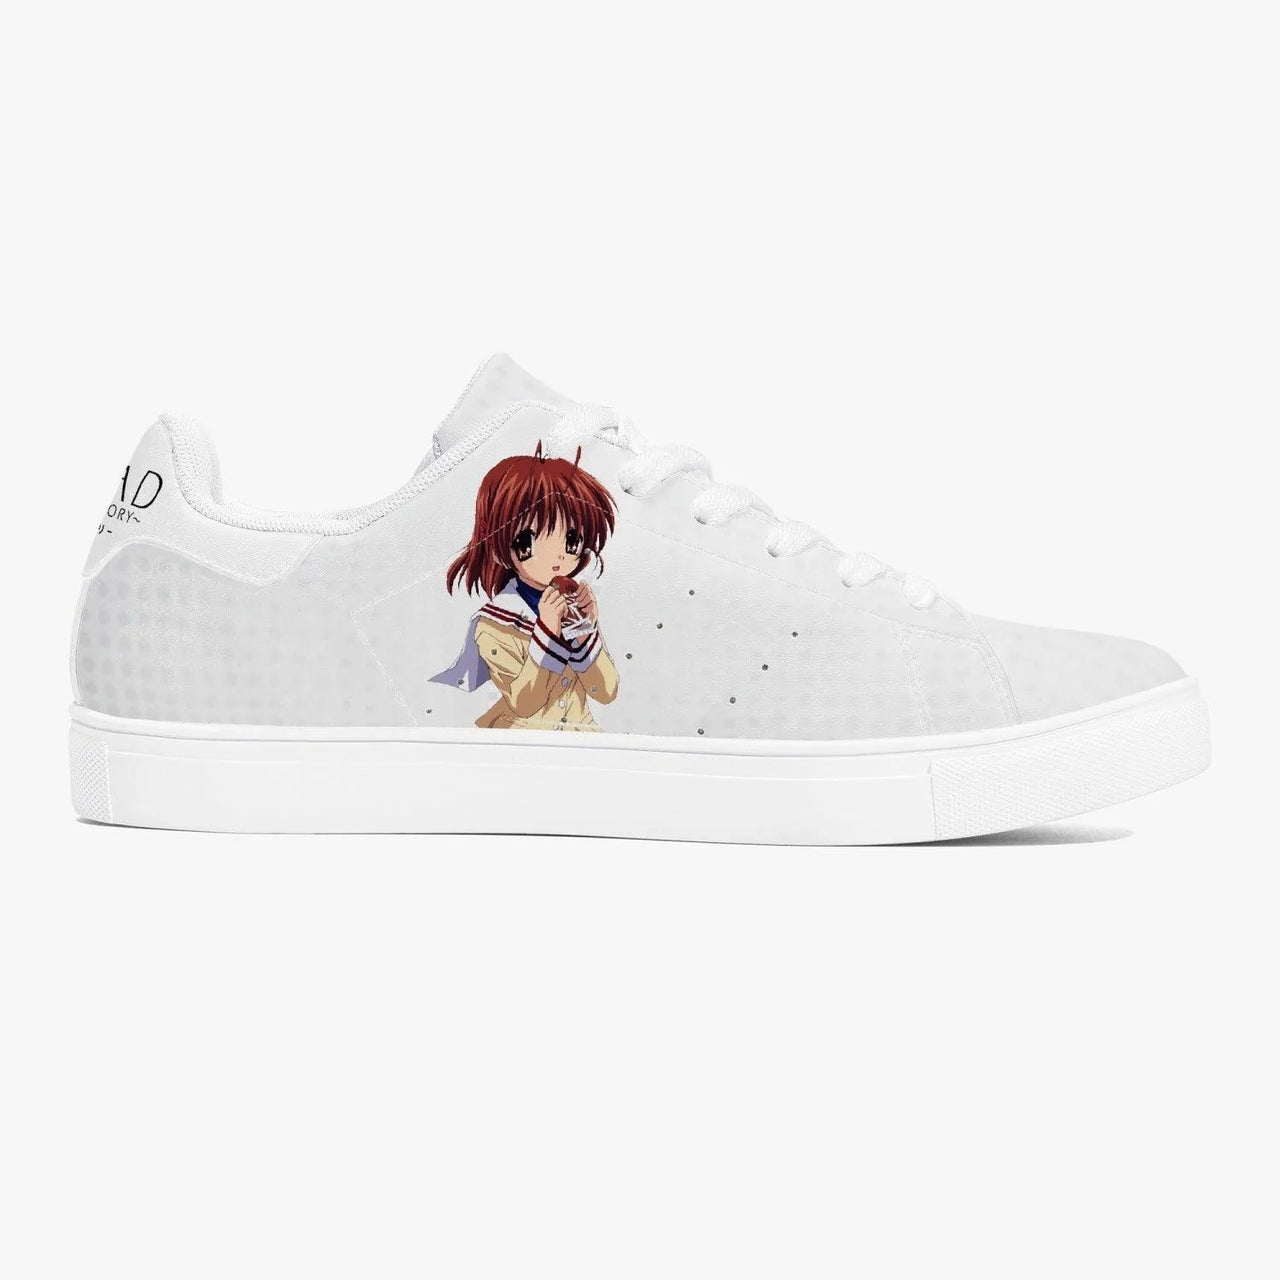 Clannad Nagisa Furukawa Skate Anime Shoes _ Clannad _ Ayuko